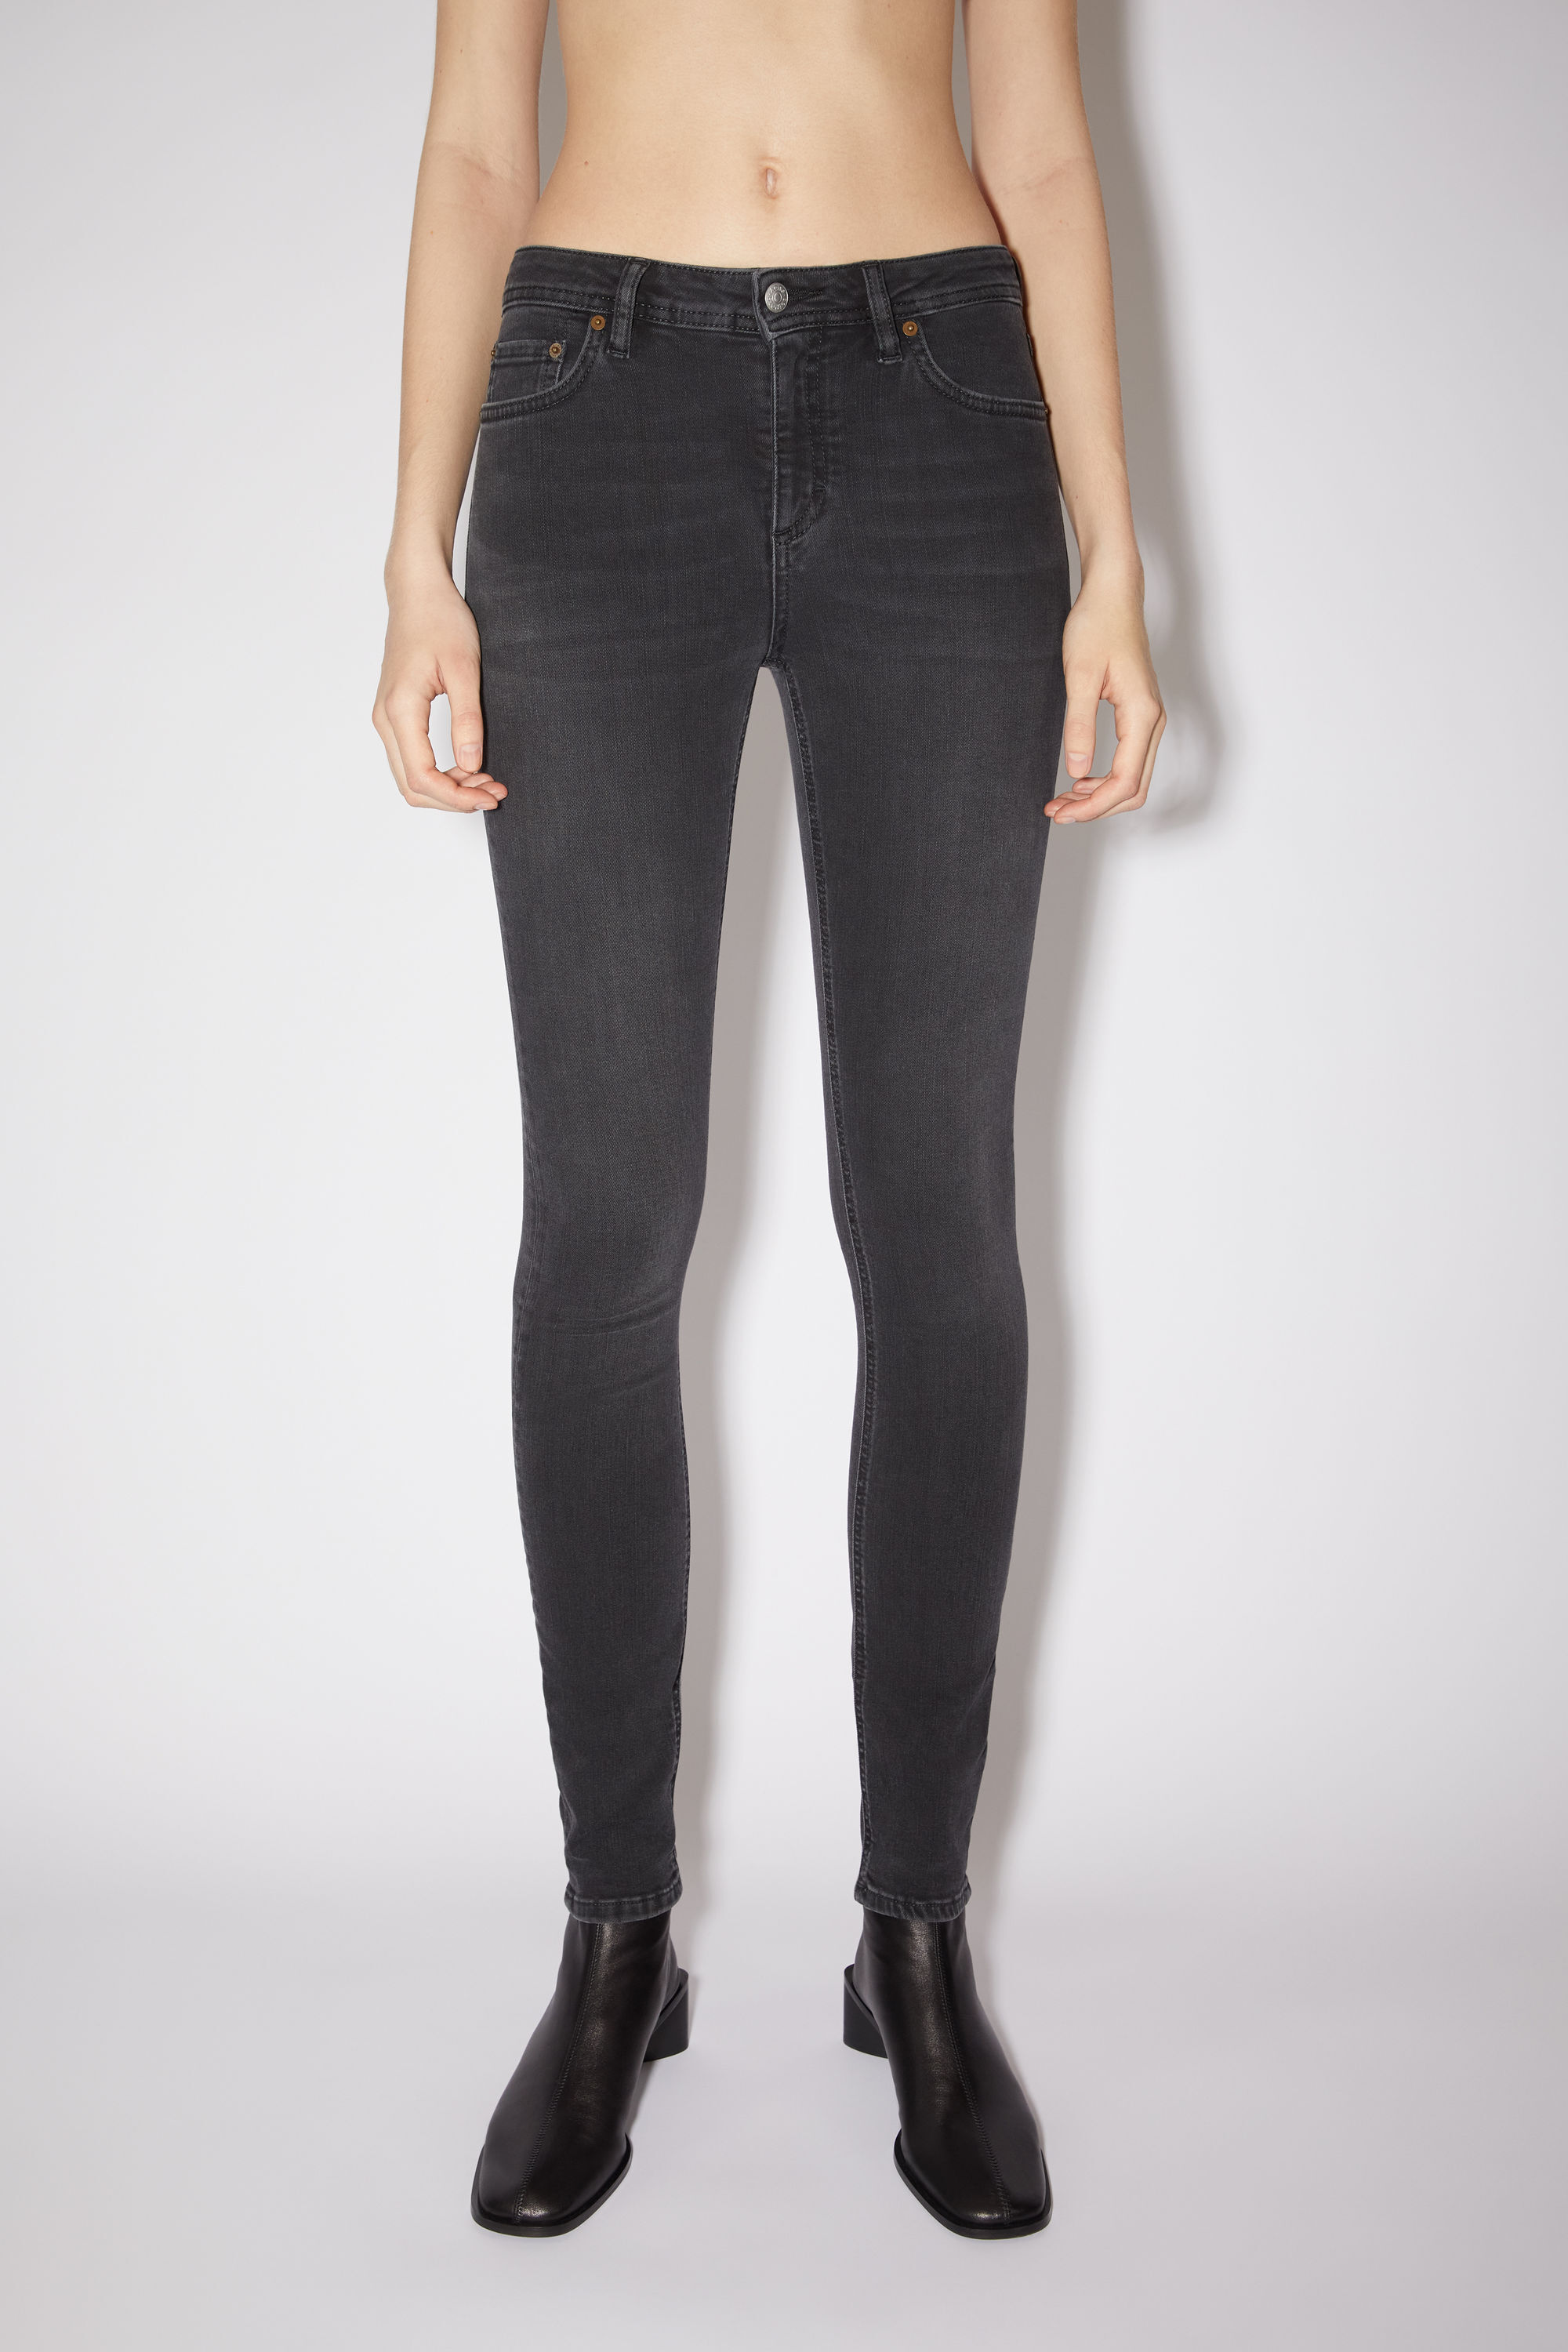 Acne Studios - Skinny fit jeans - Climb - Used black